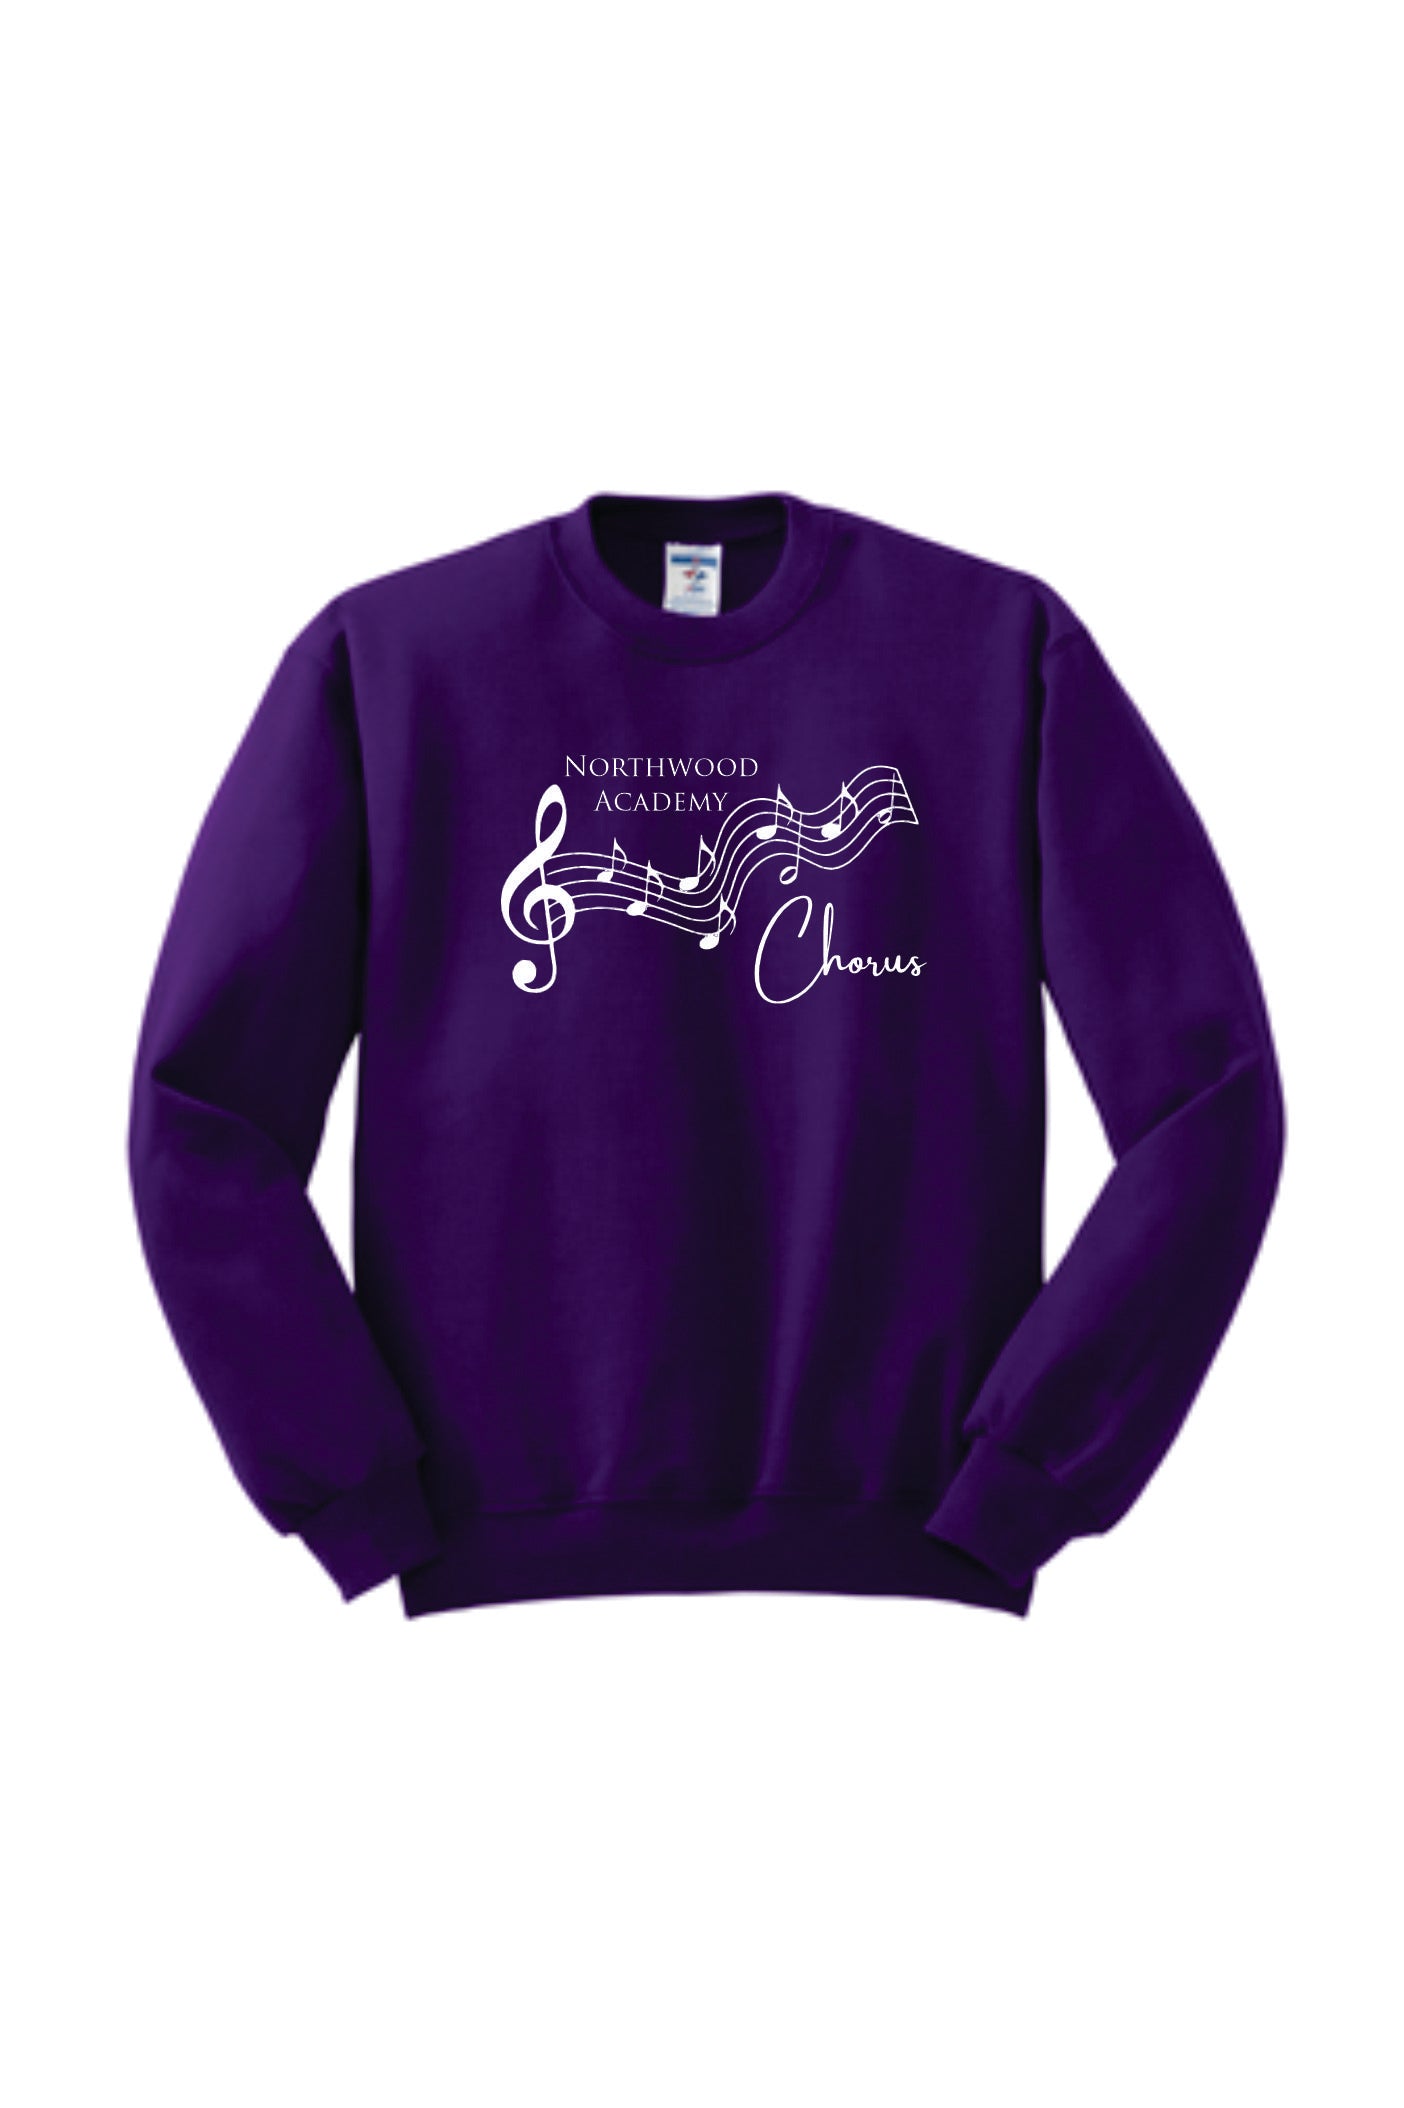 Chorus Crewneck Sweatshirt - 3 colors - APPROVED SCHOOL ATTIRE